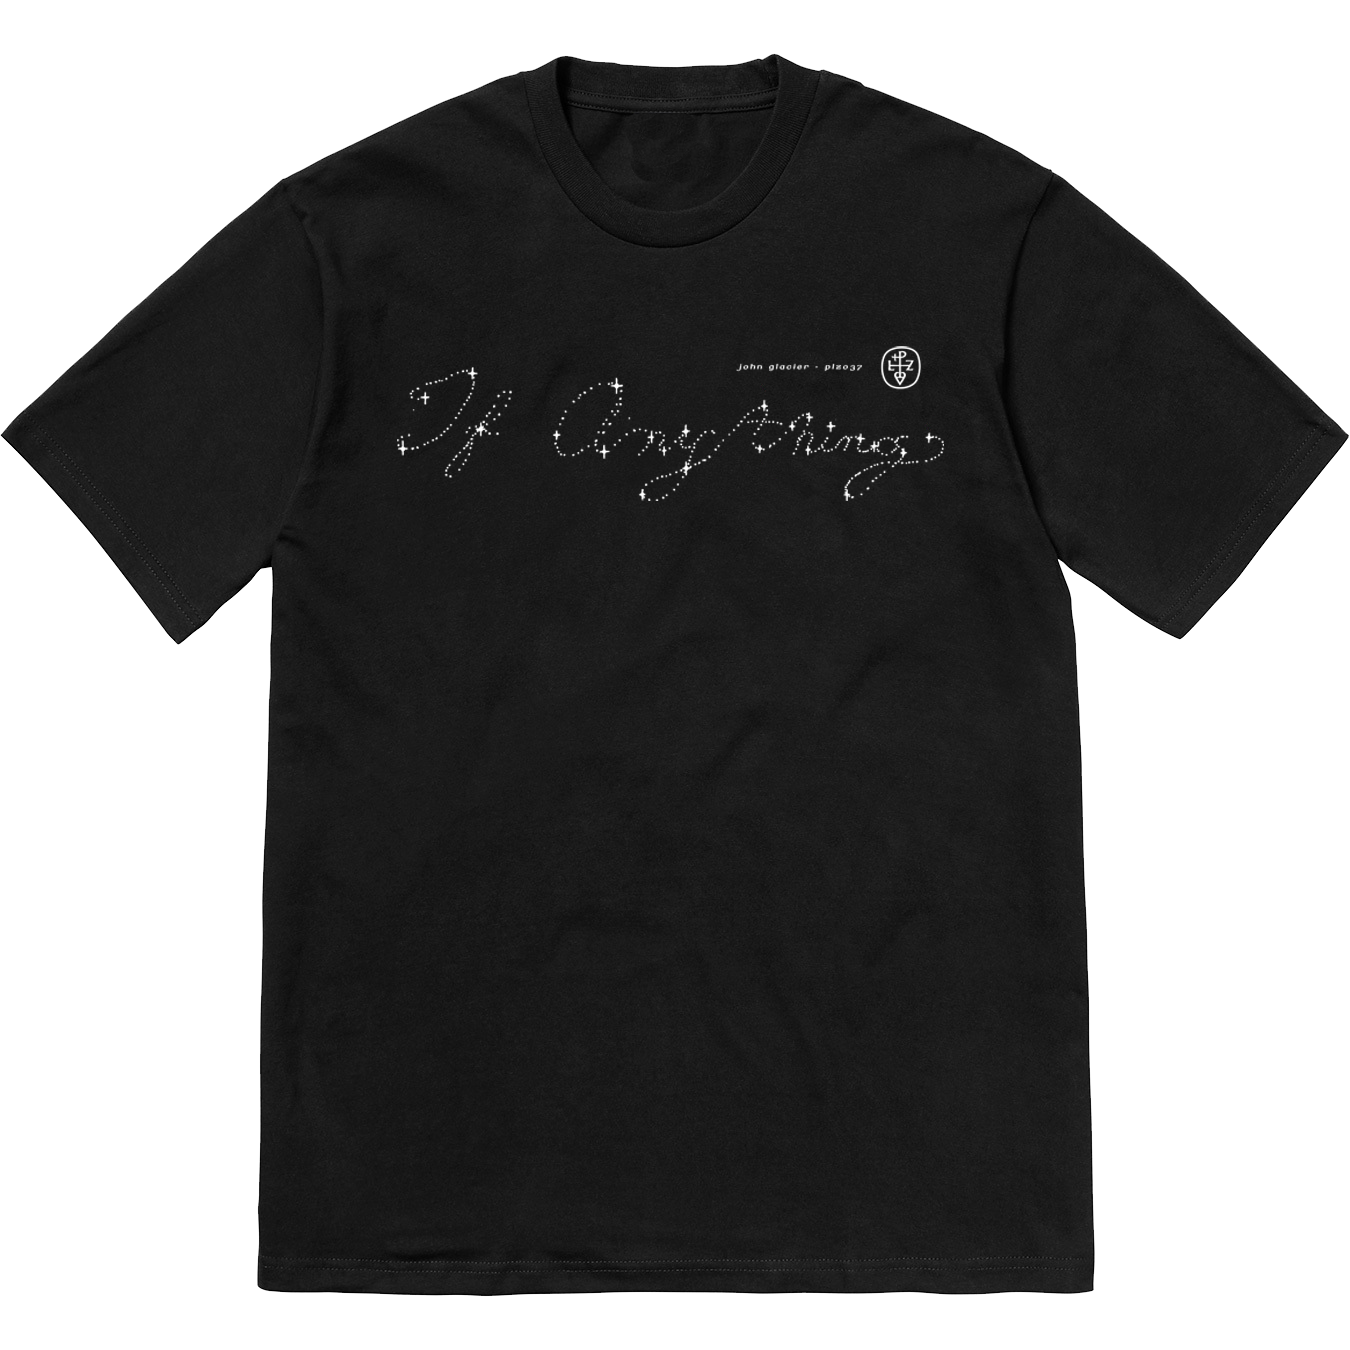 John Glacier - If Anything T-Shirt